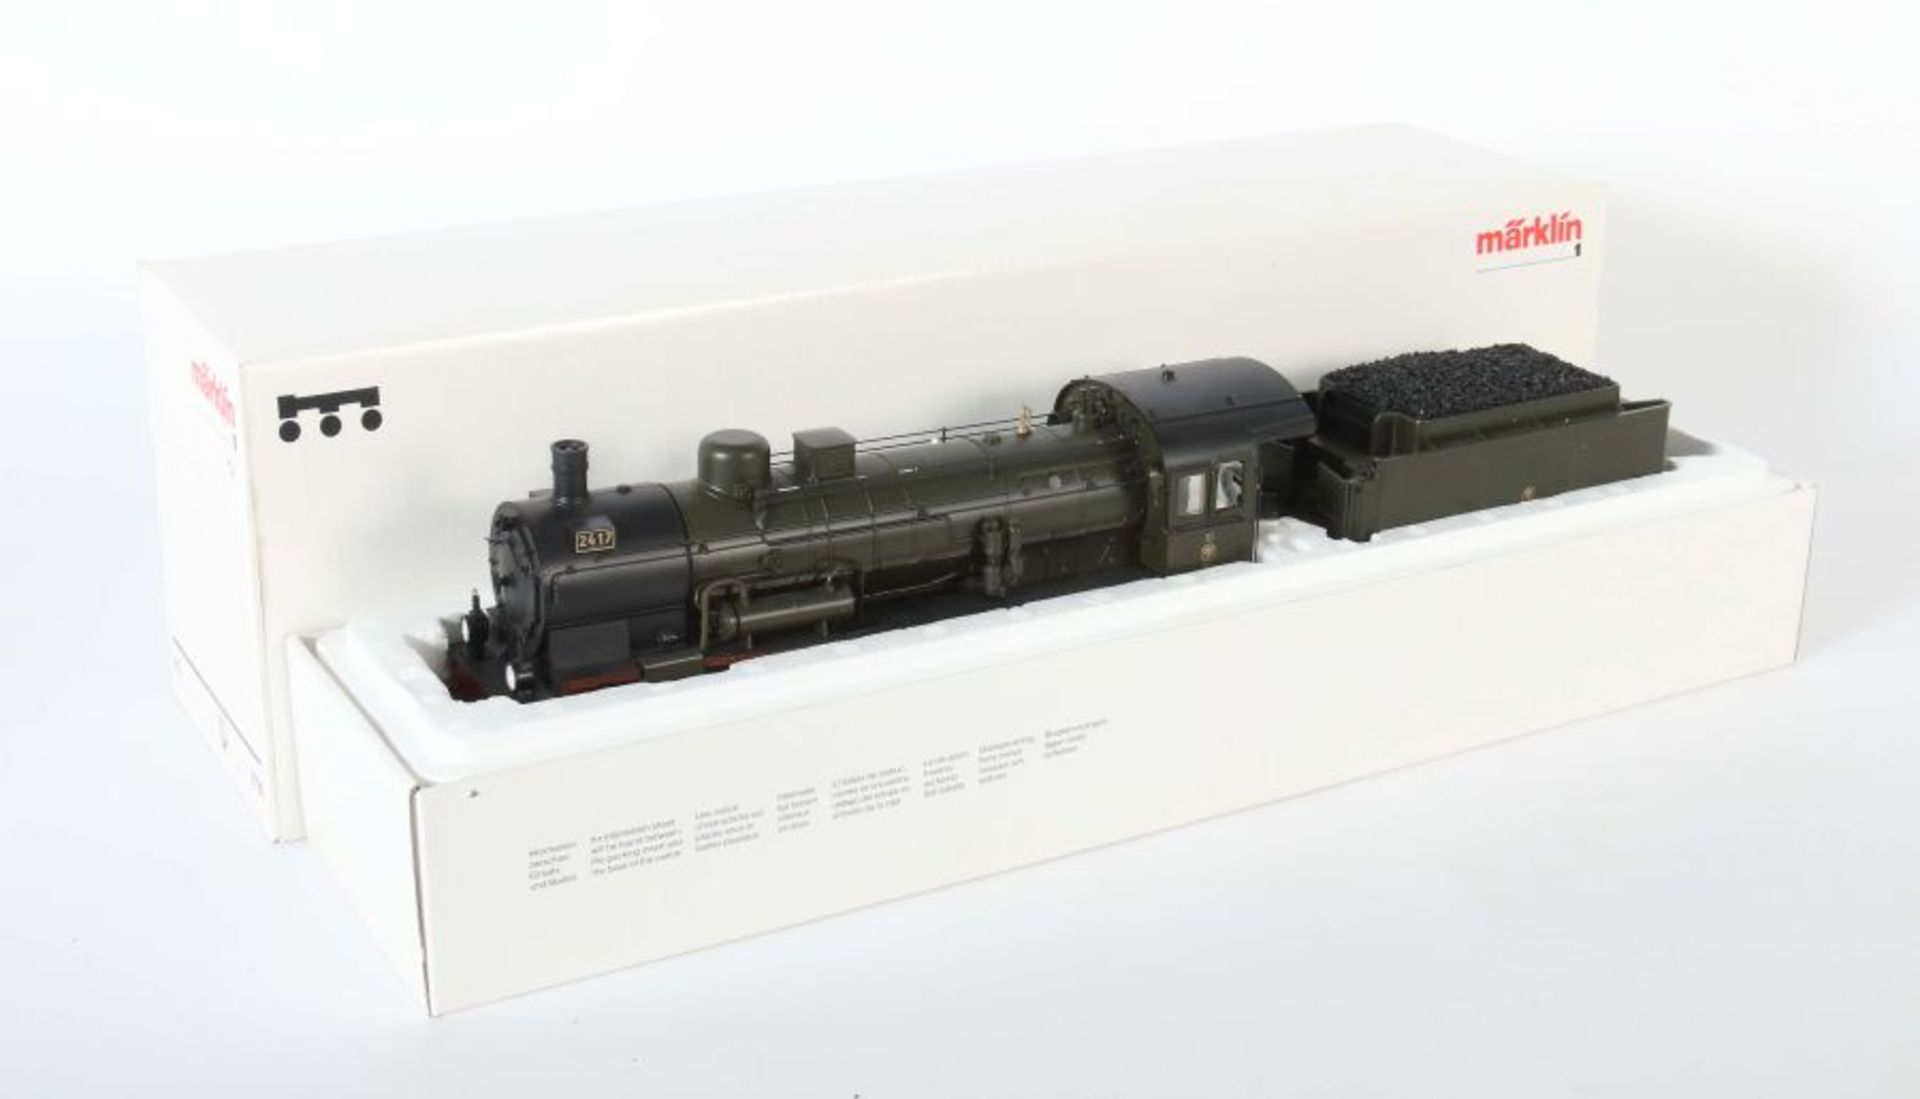 Preußische Schlepptenderlok P8 Märklin, Modellnr. 5796, Spur 1, Replika, 3-/5-achsige Lokomotive - Bild 2 aus 2